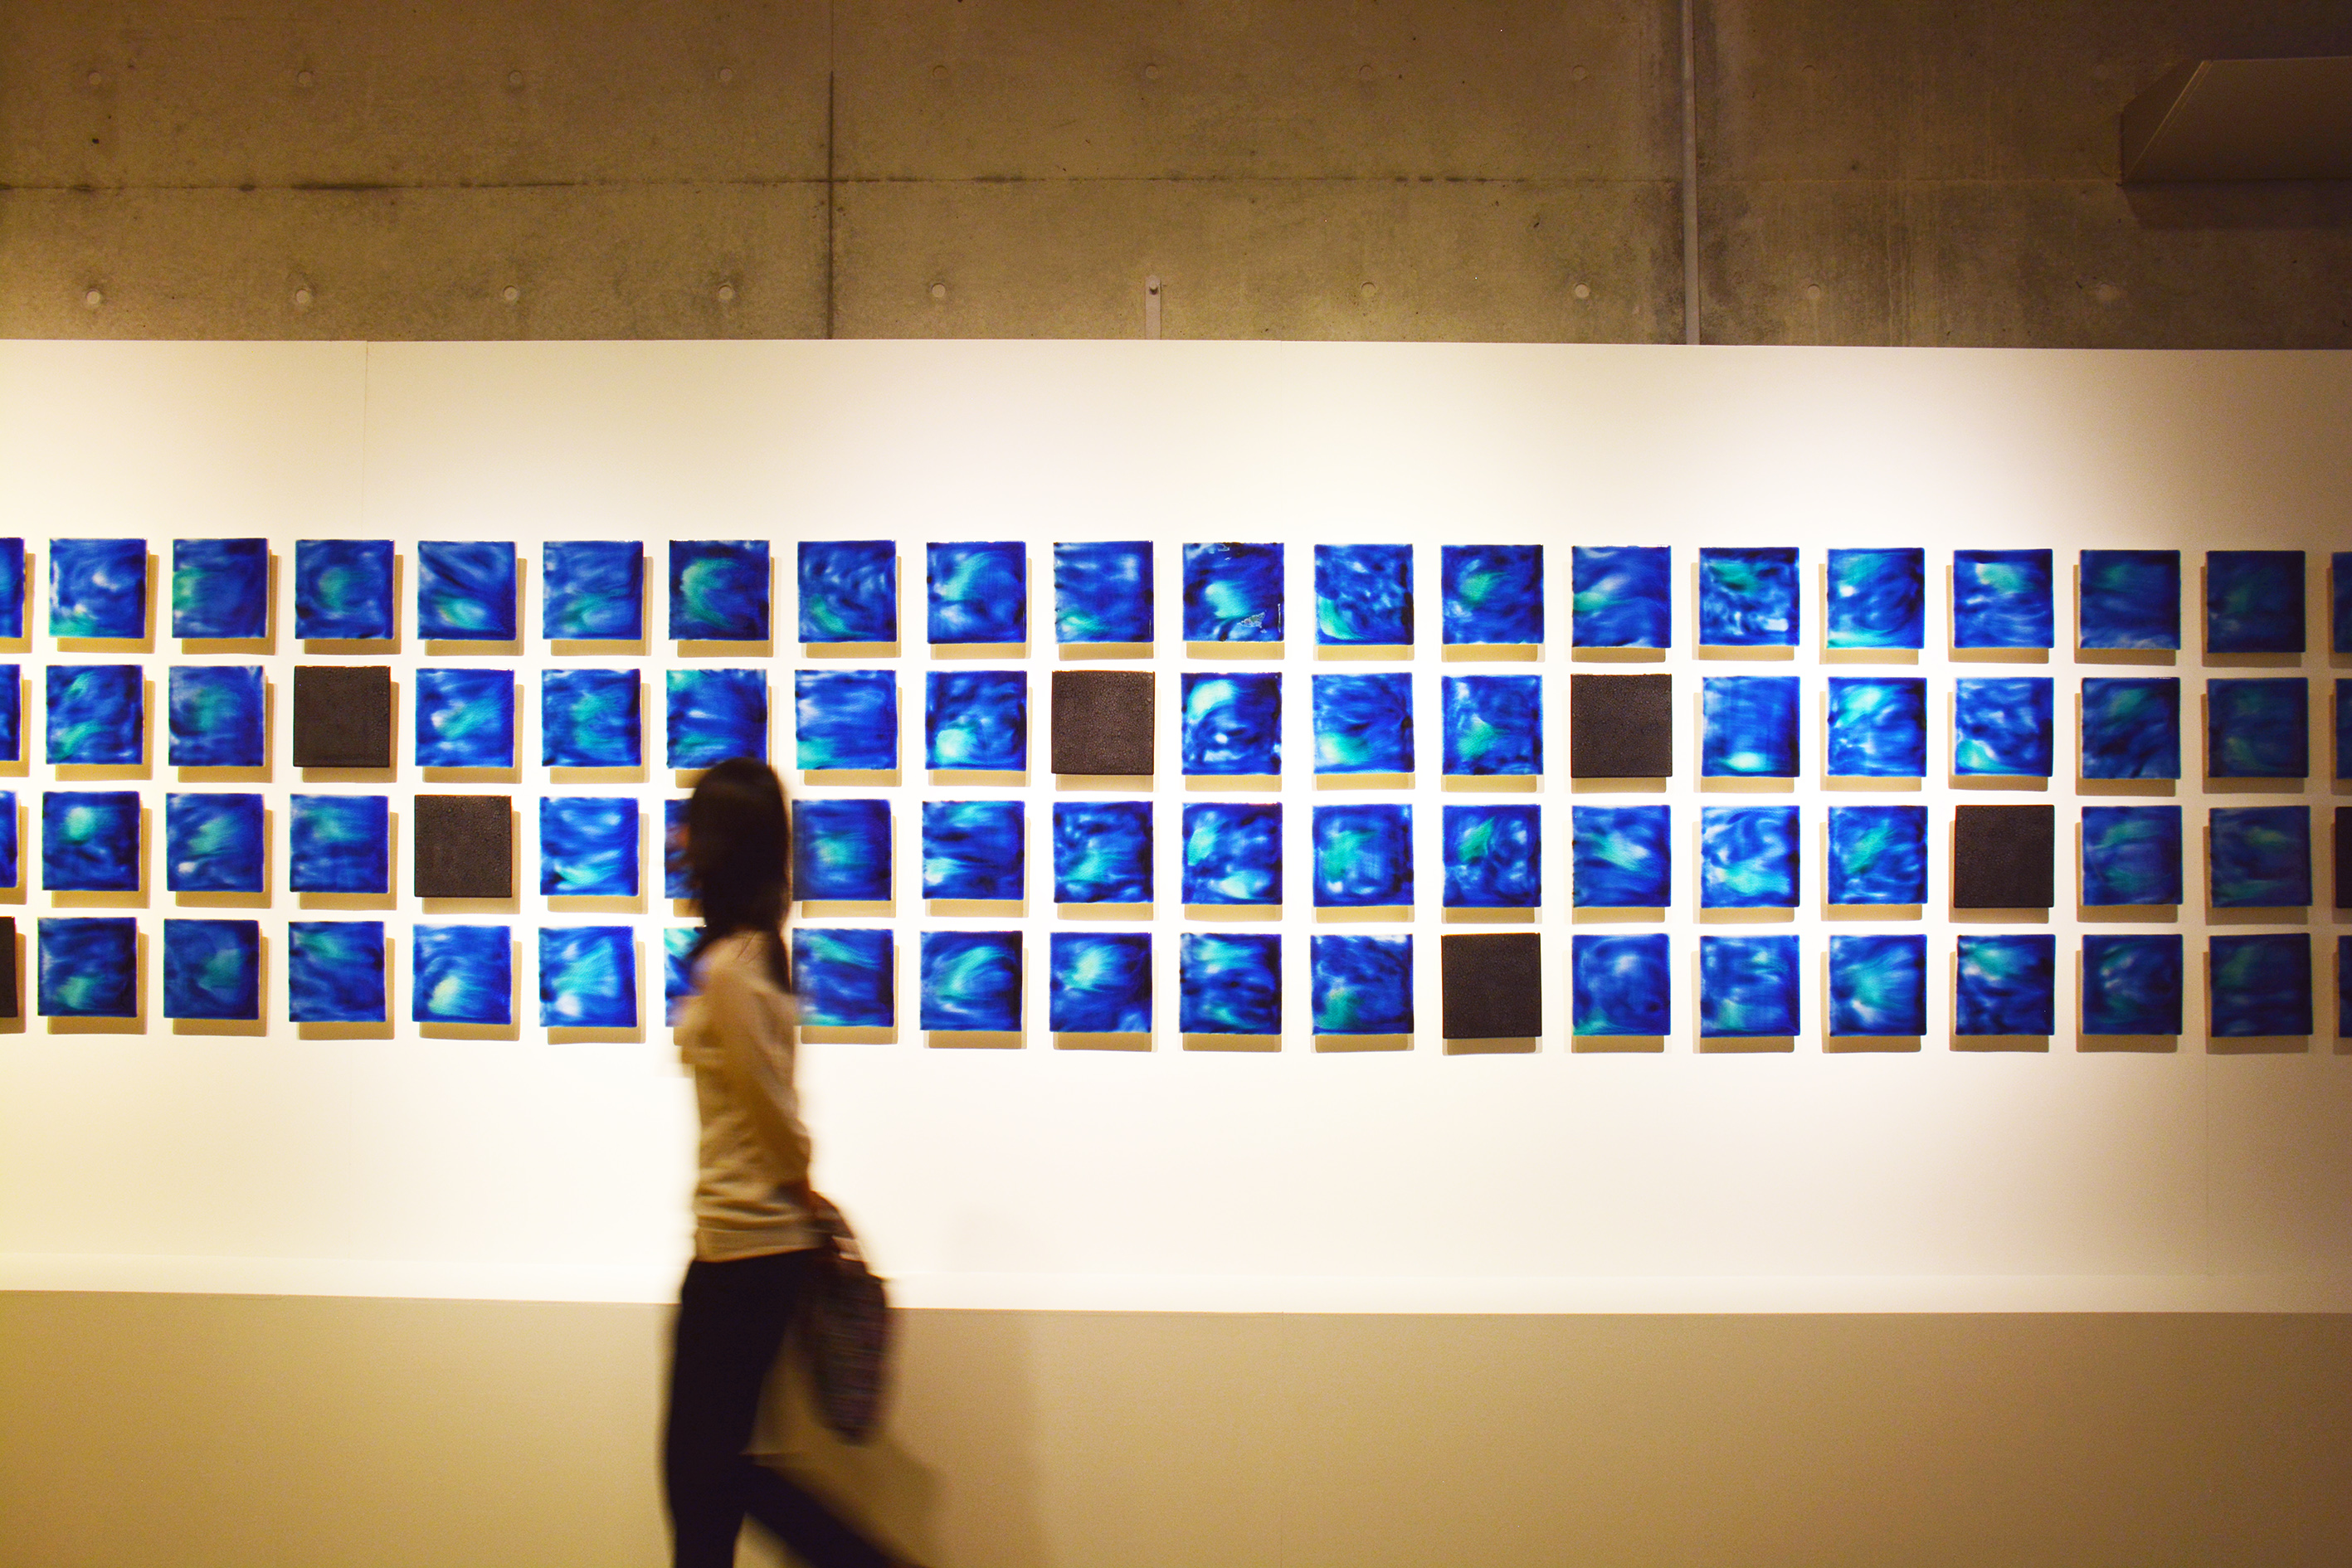 Ishigaki Blue – a visitor walks by the artwork